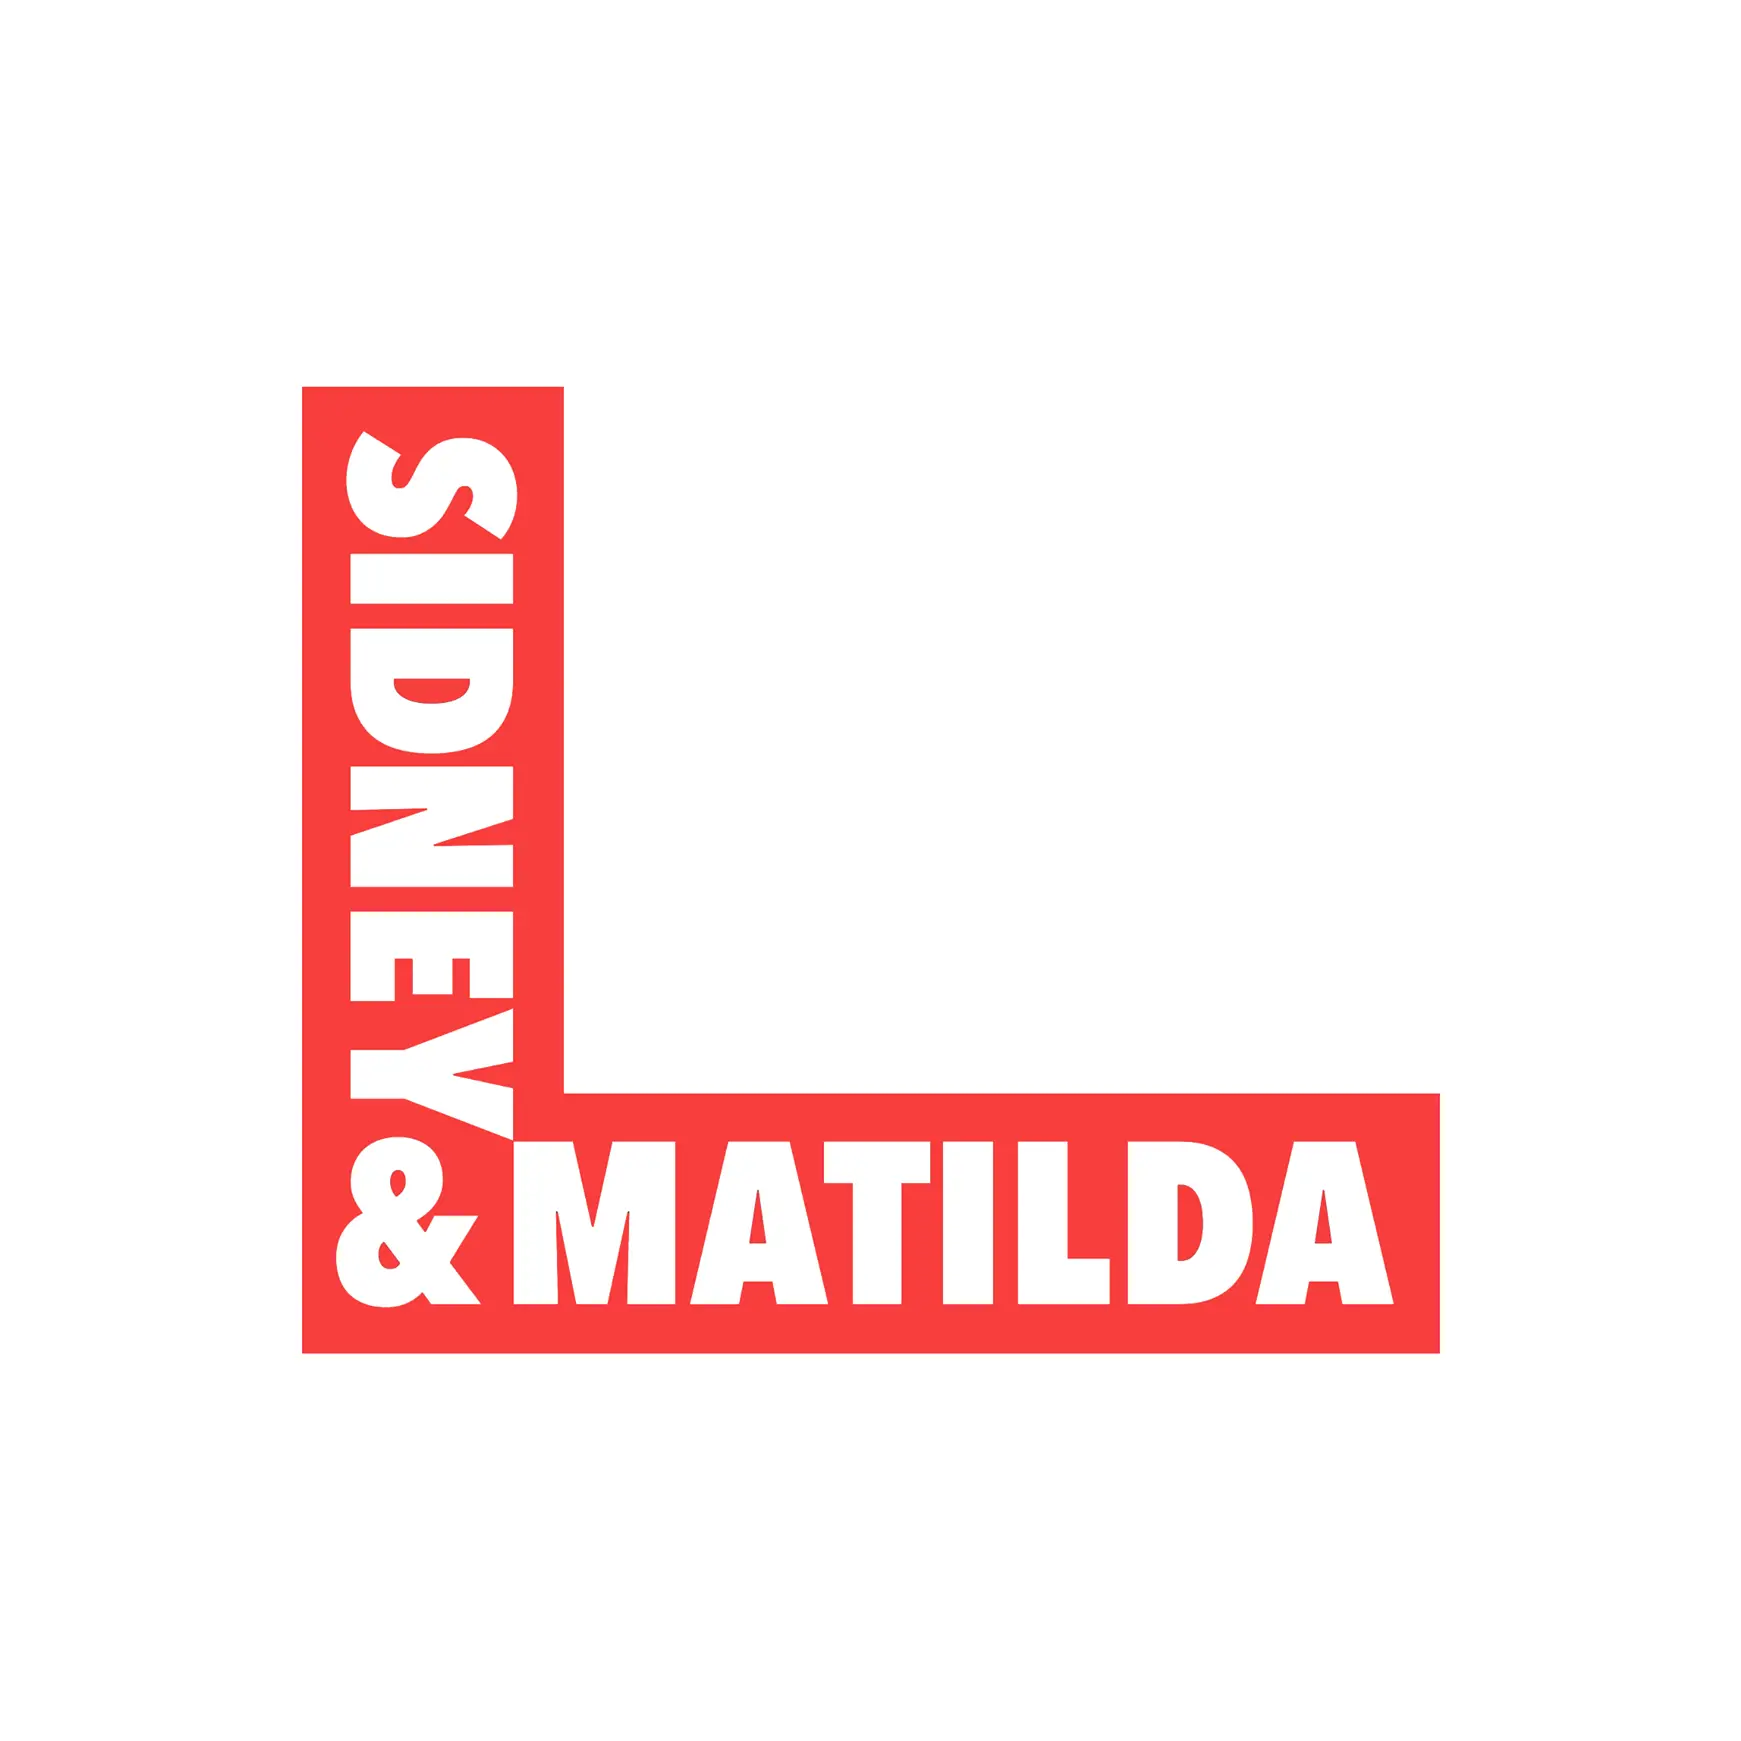 Sidney&Matilda